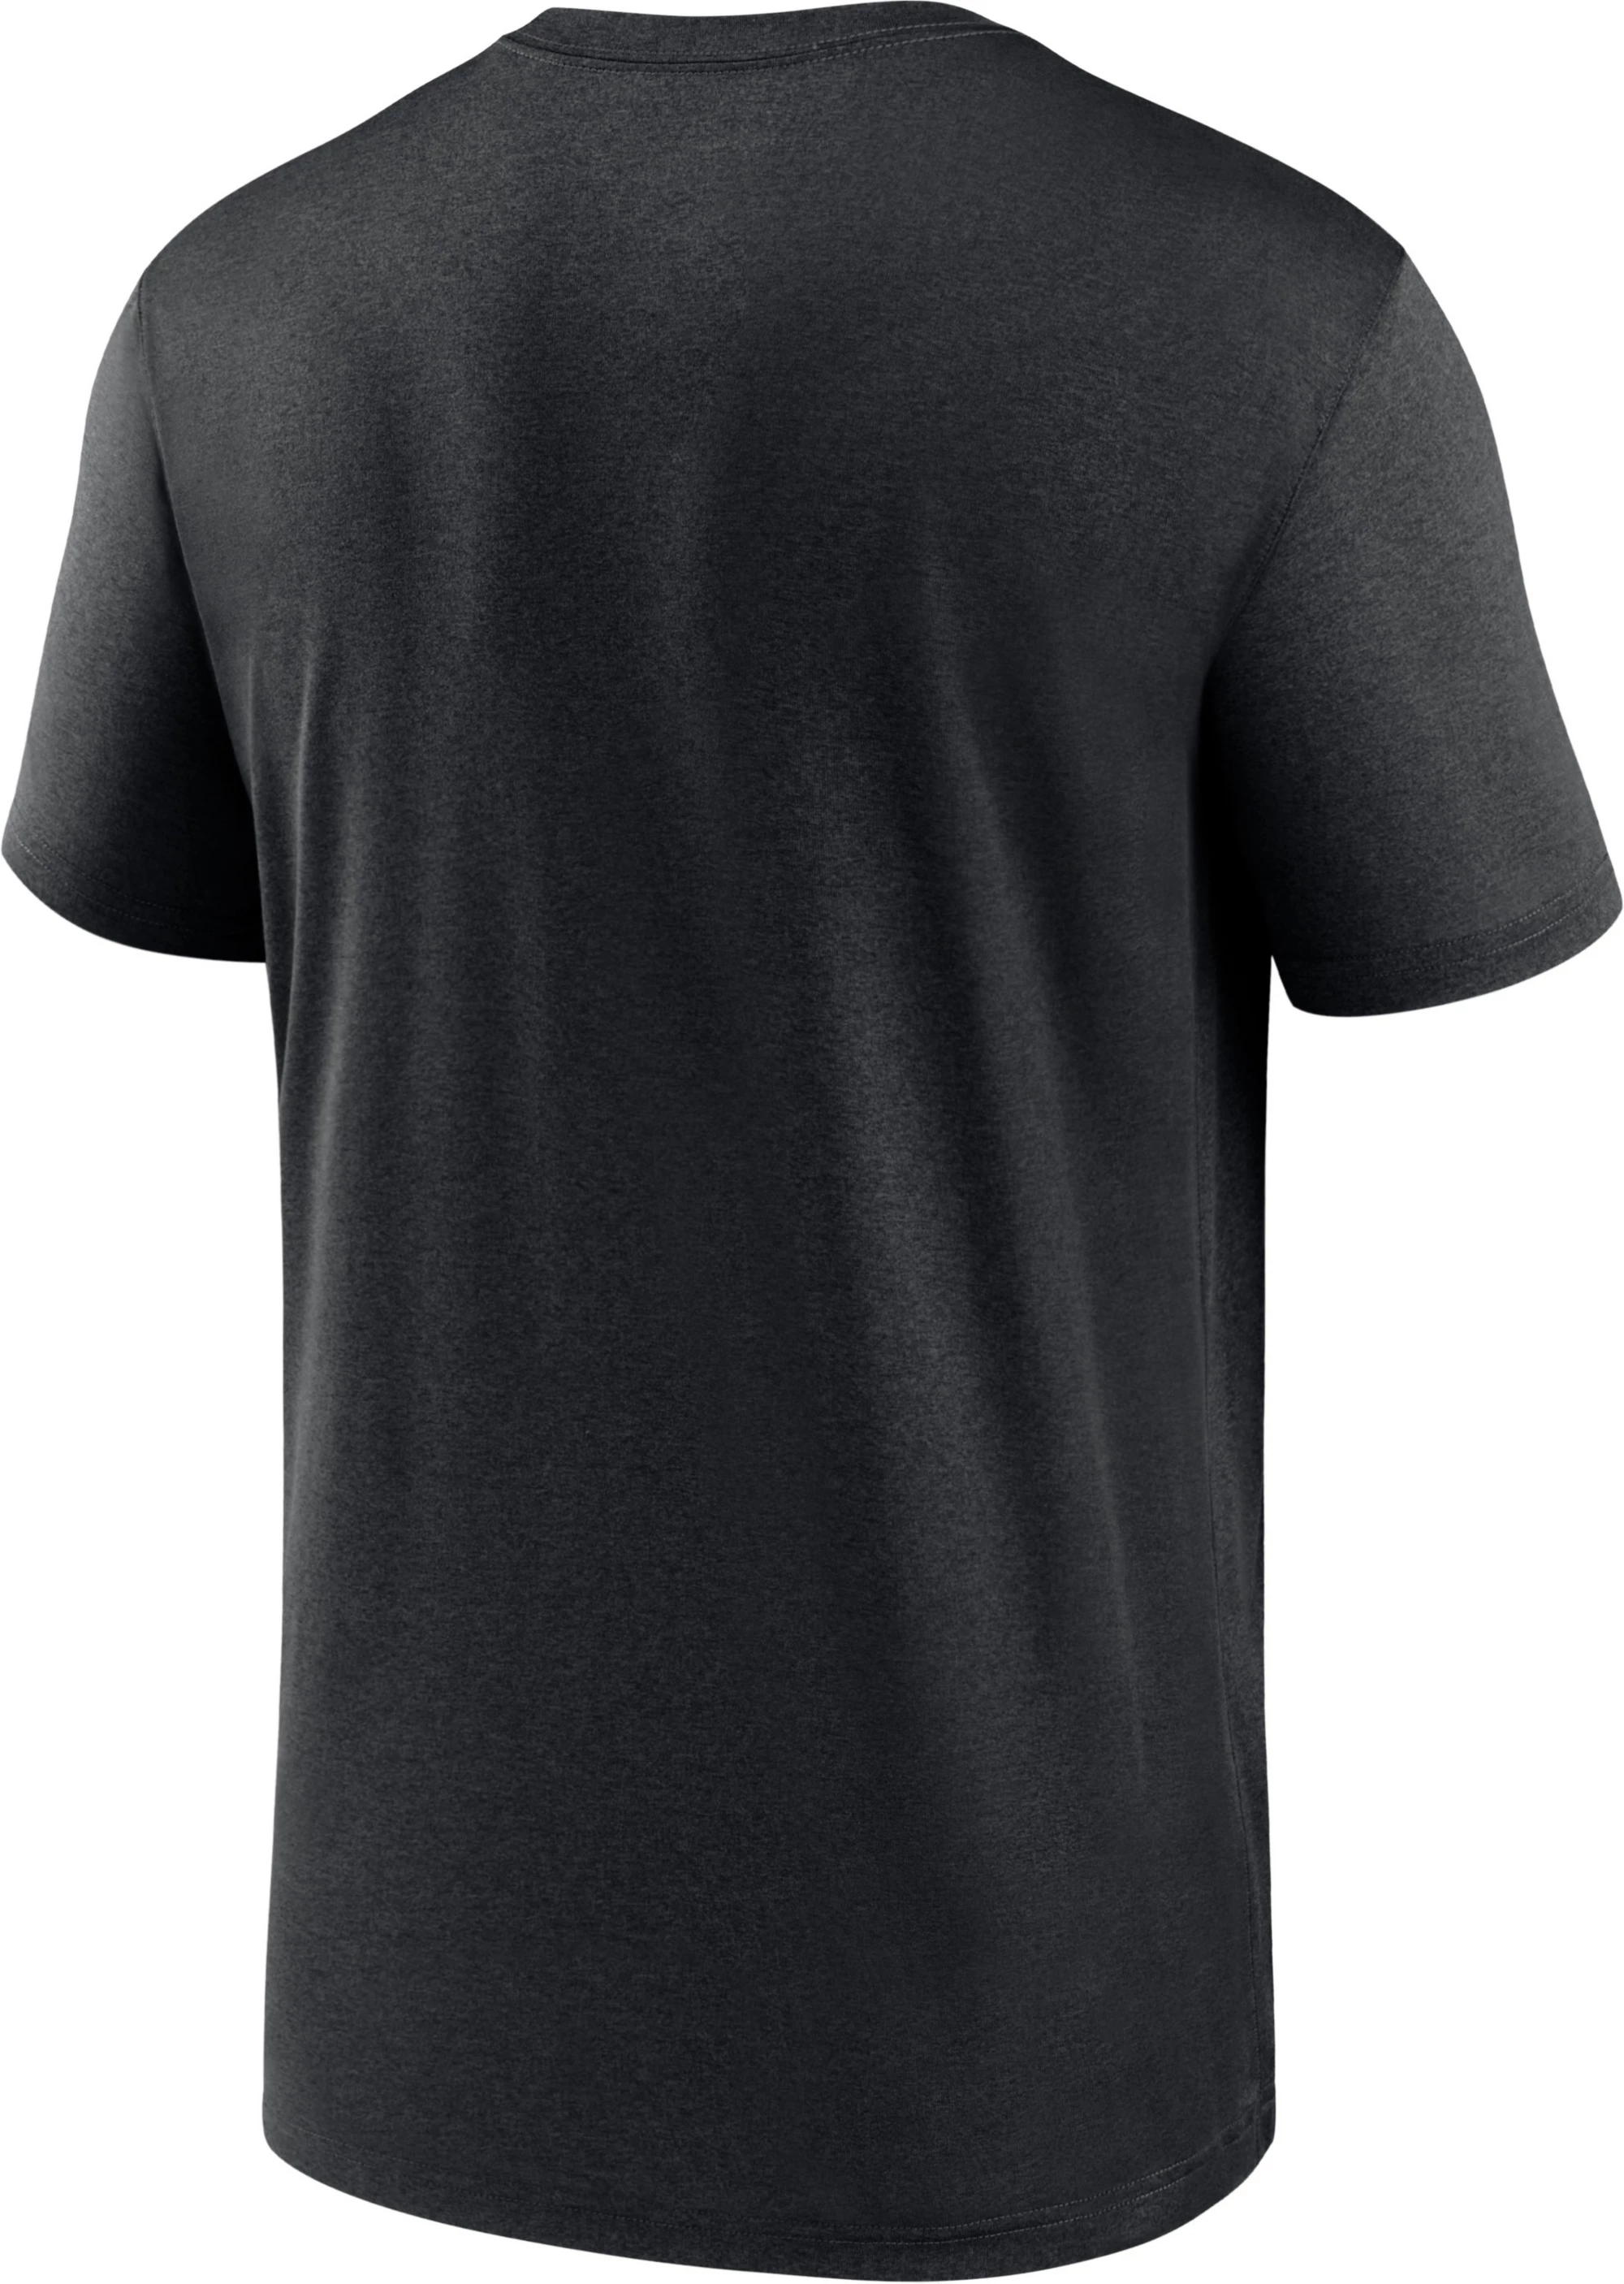 Nike Men's San Francisco Giants Black Legend Game T-Shirt